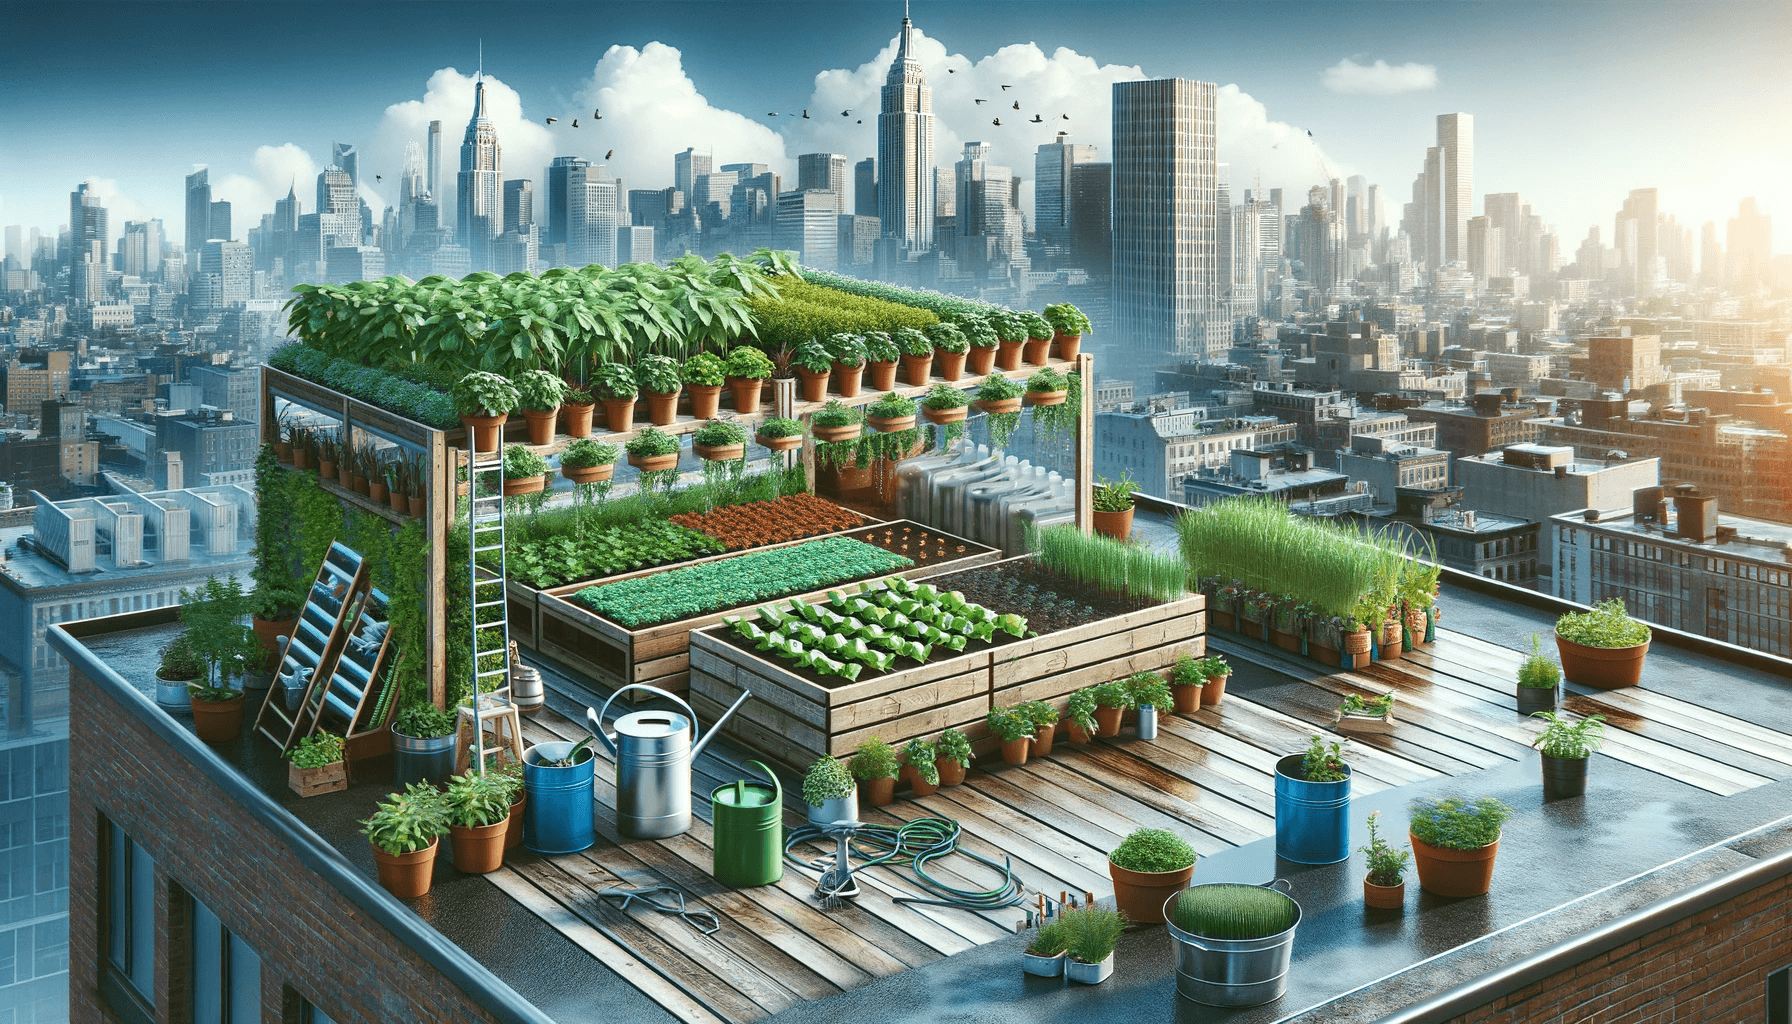 A rooftop garden or urban farm using fulvic acid to enhance plant growth